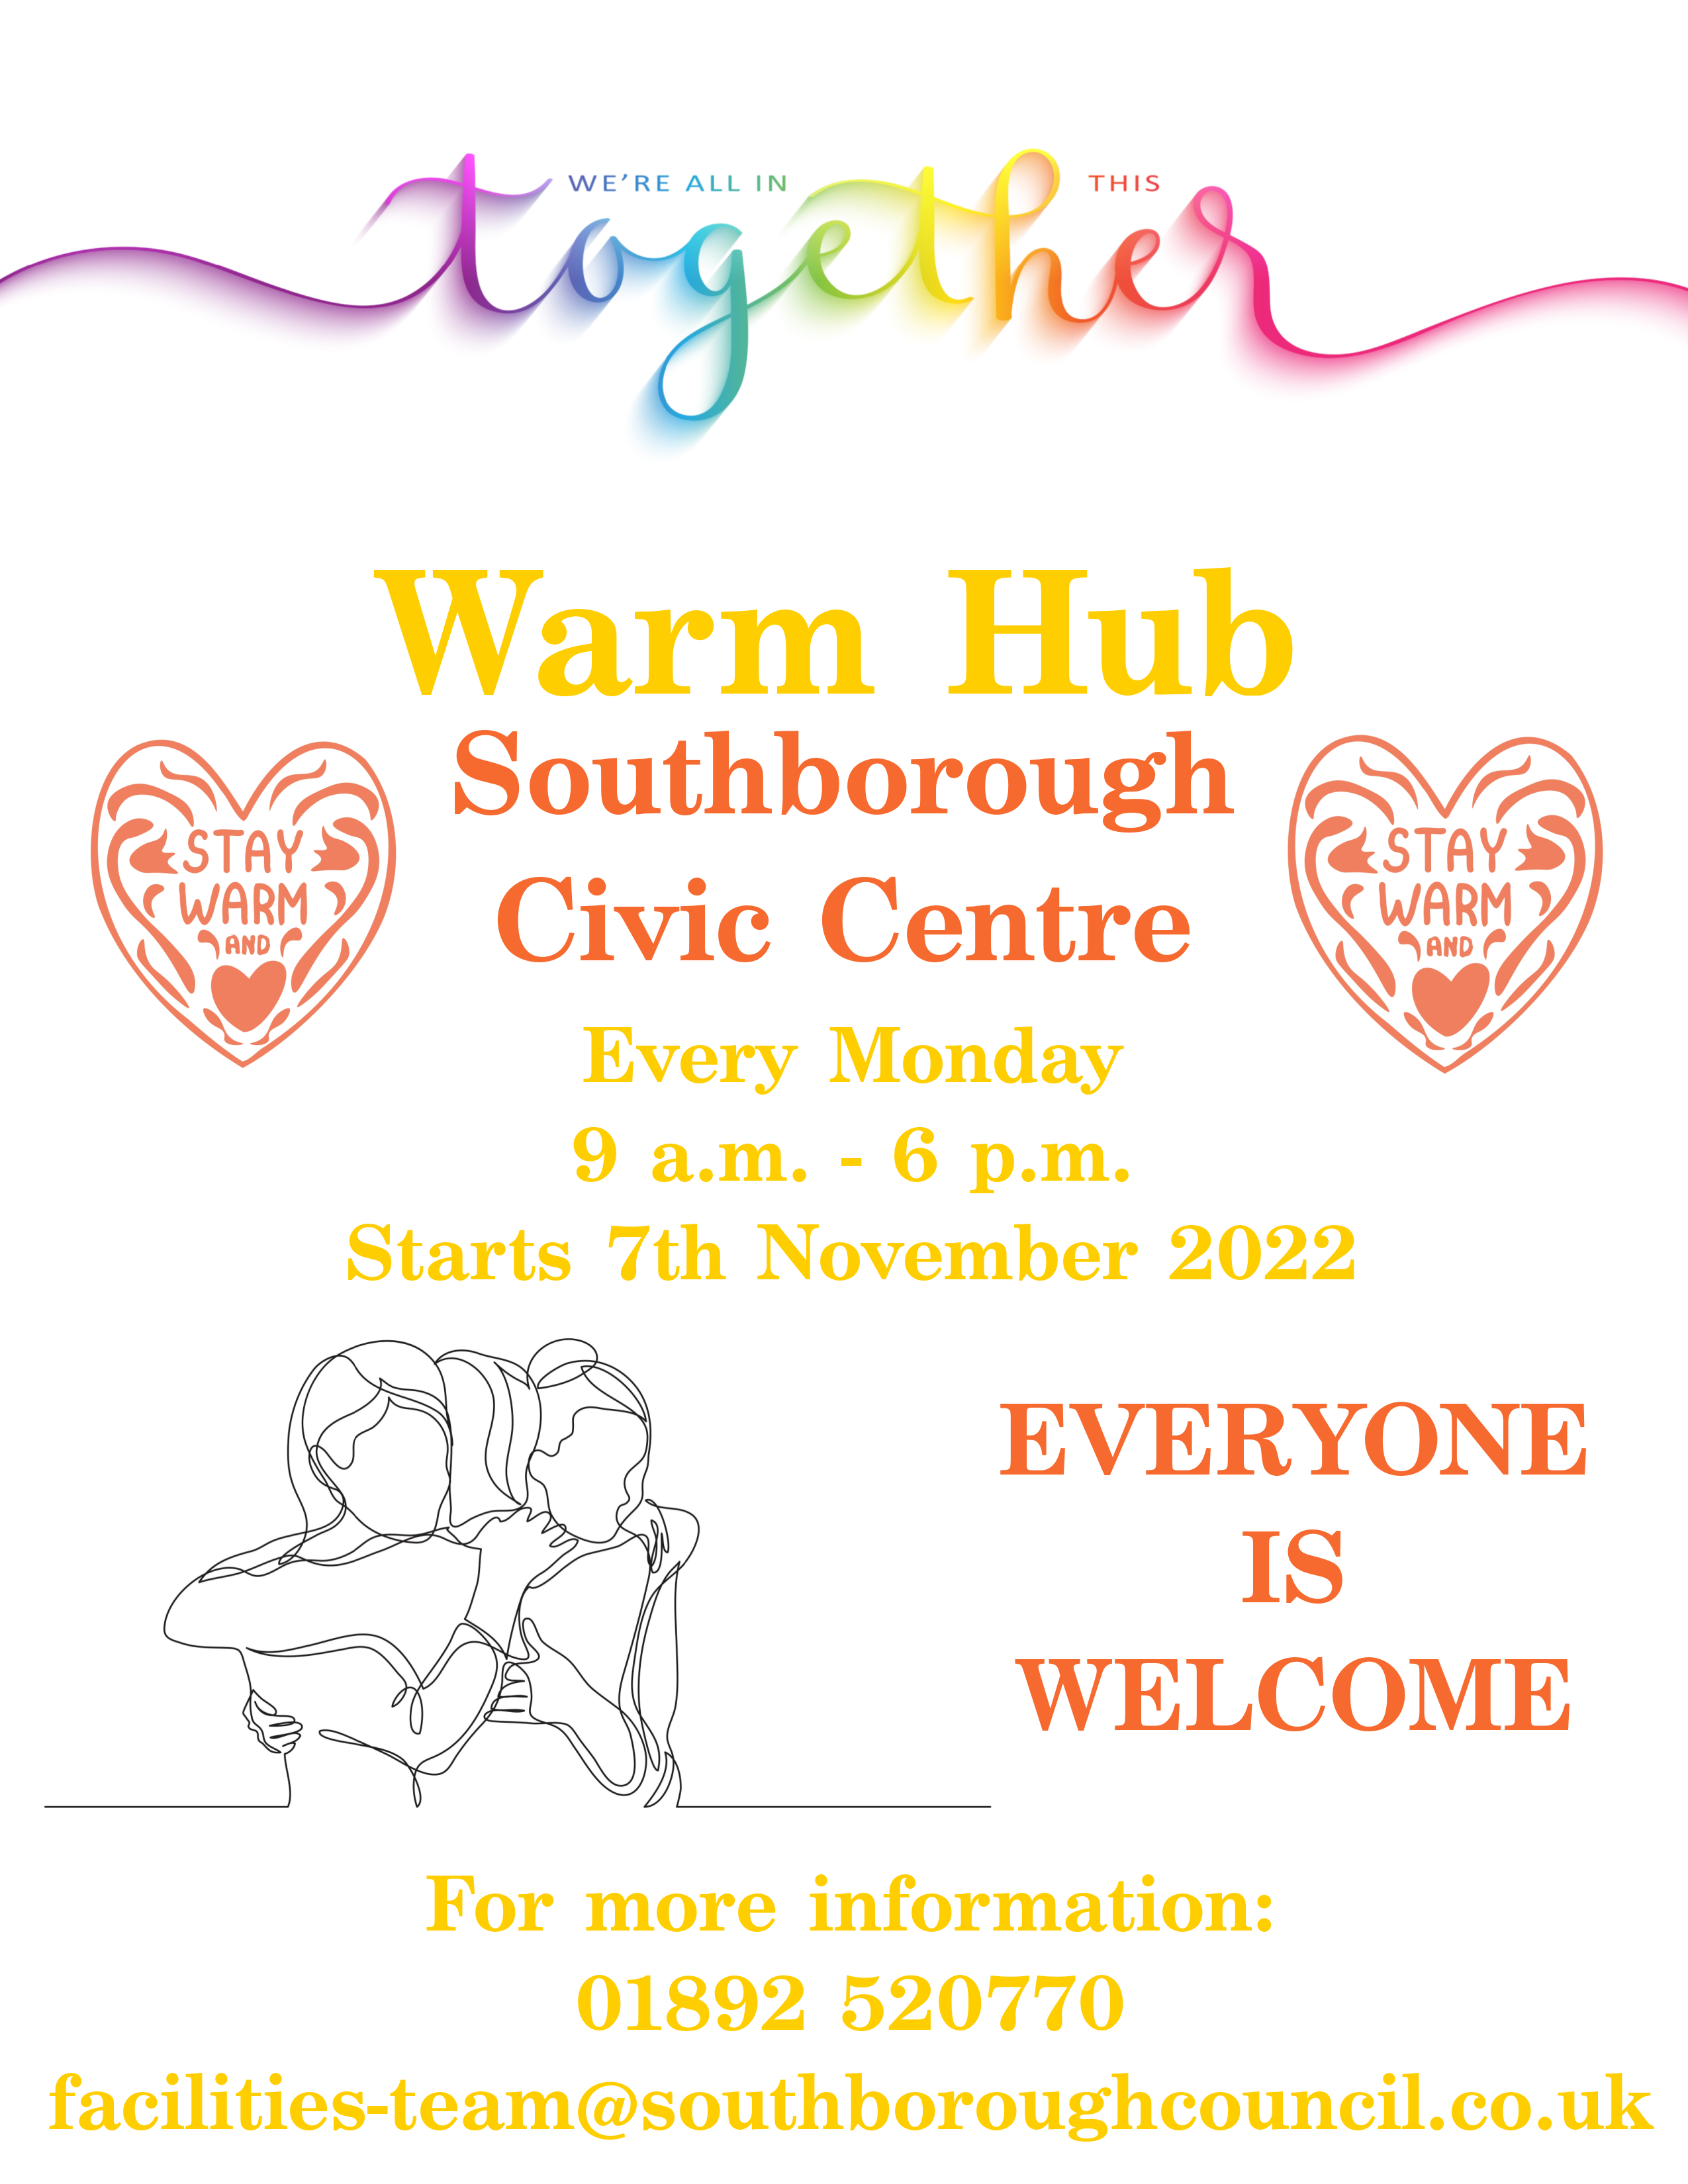 Warm Hub – Southborough Civic Centre